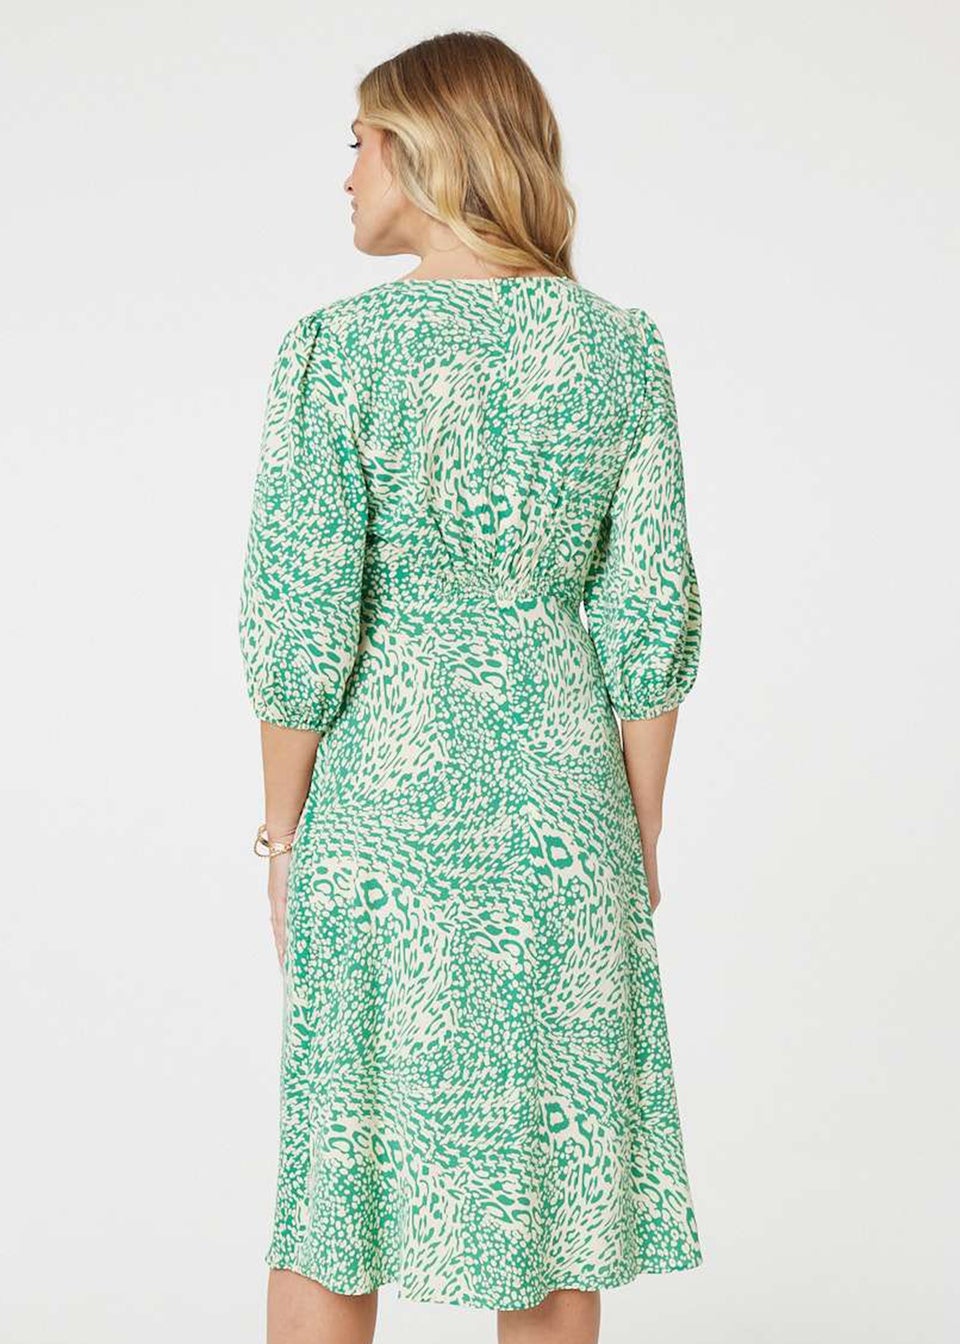 Izabel London Green Animal Print Slim Fit Midi Dress